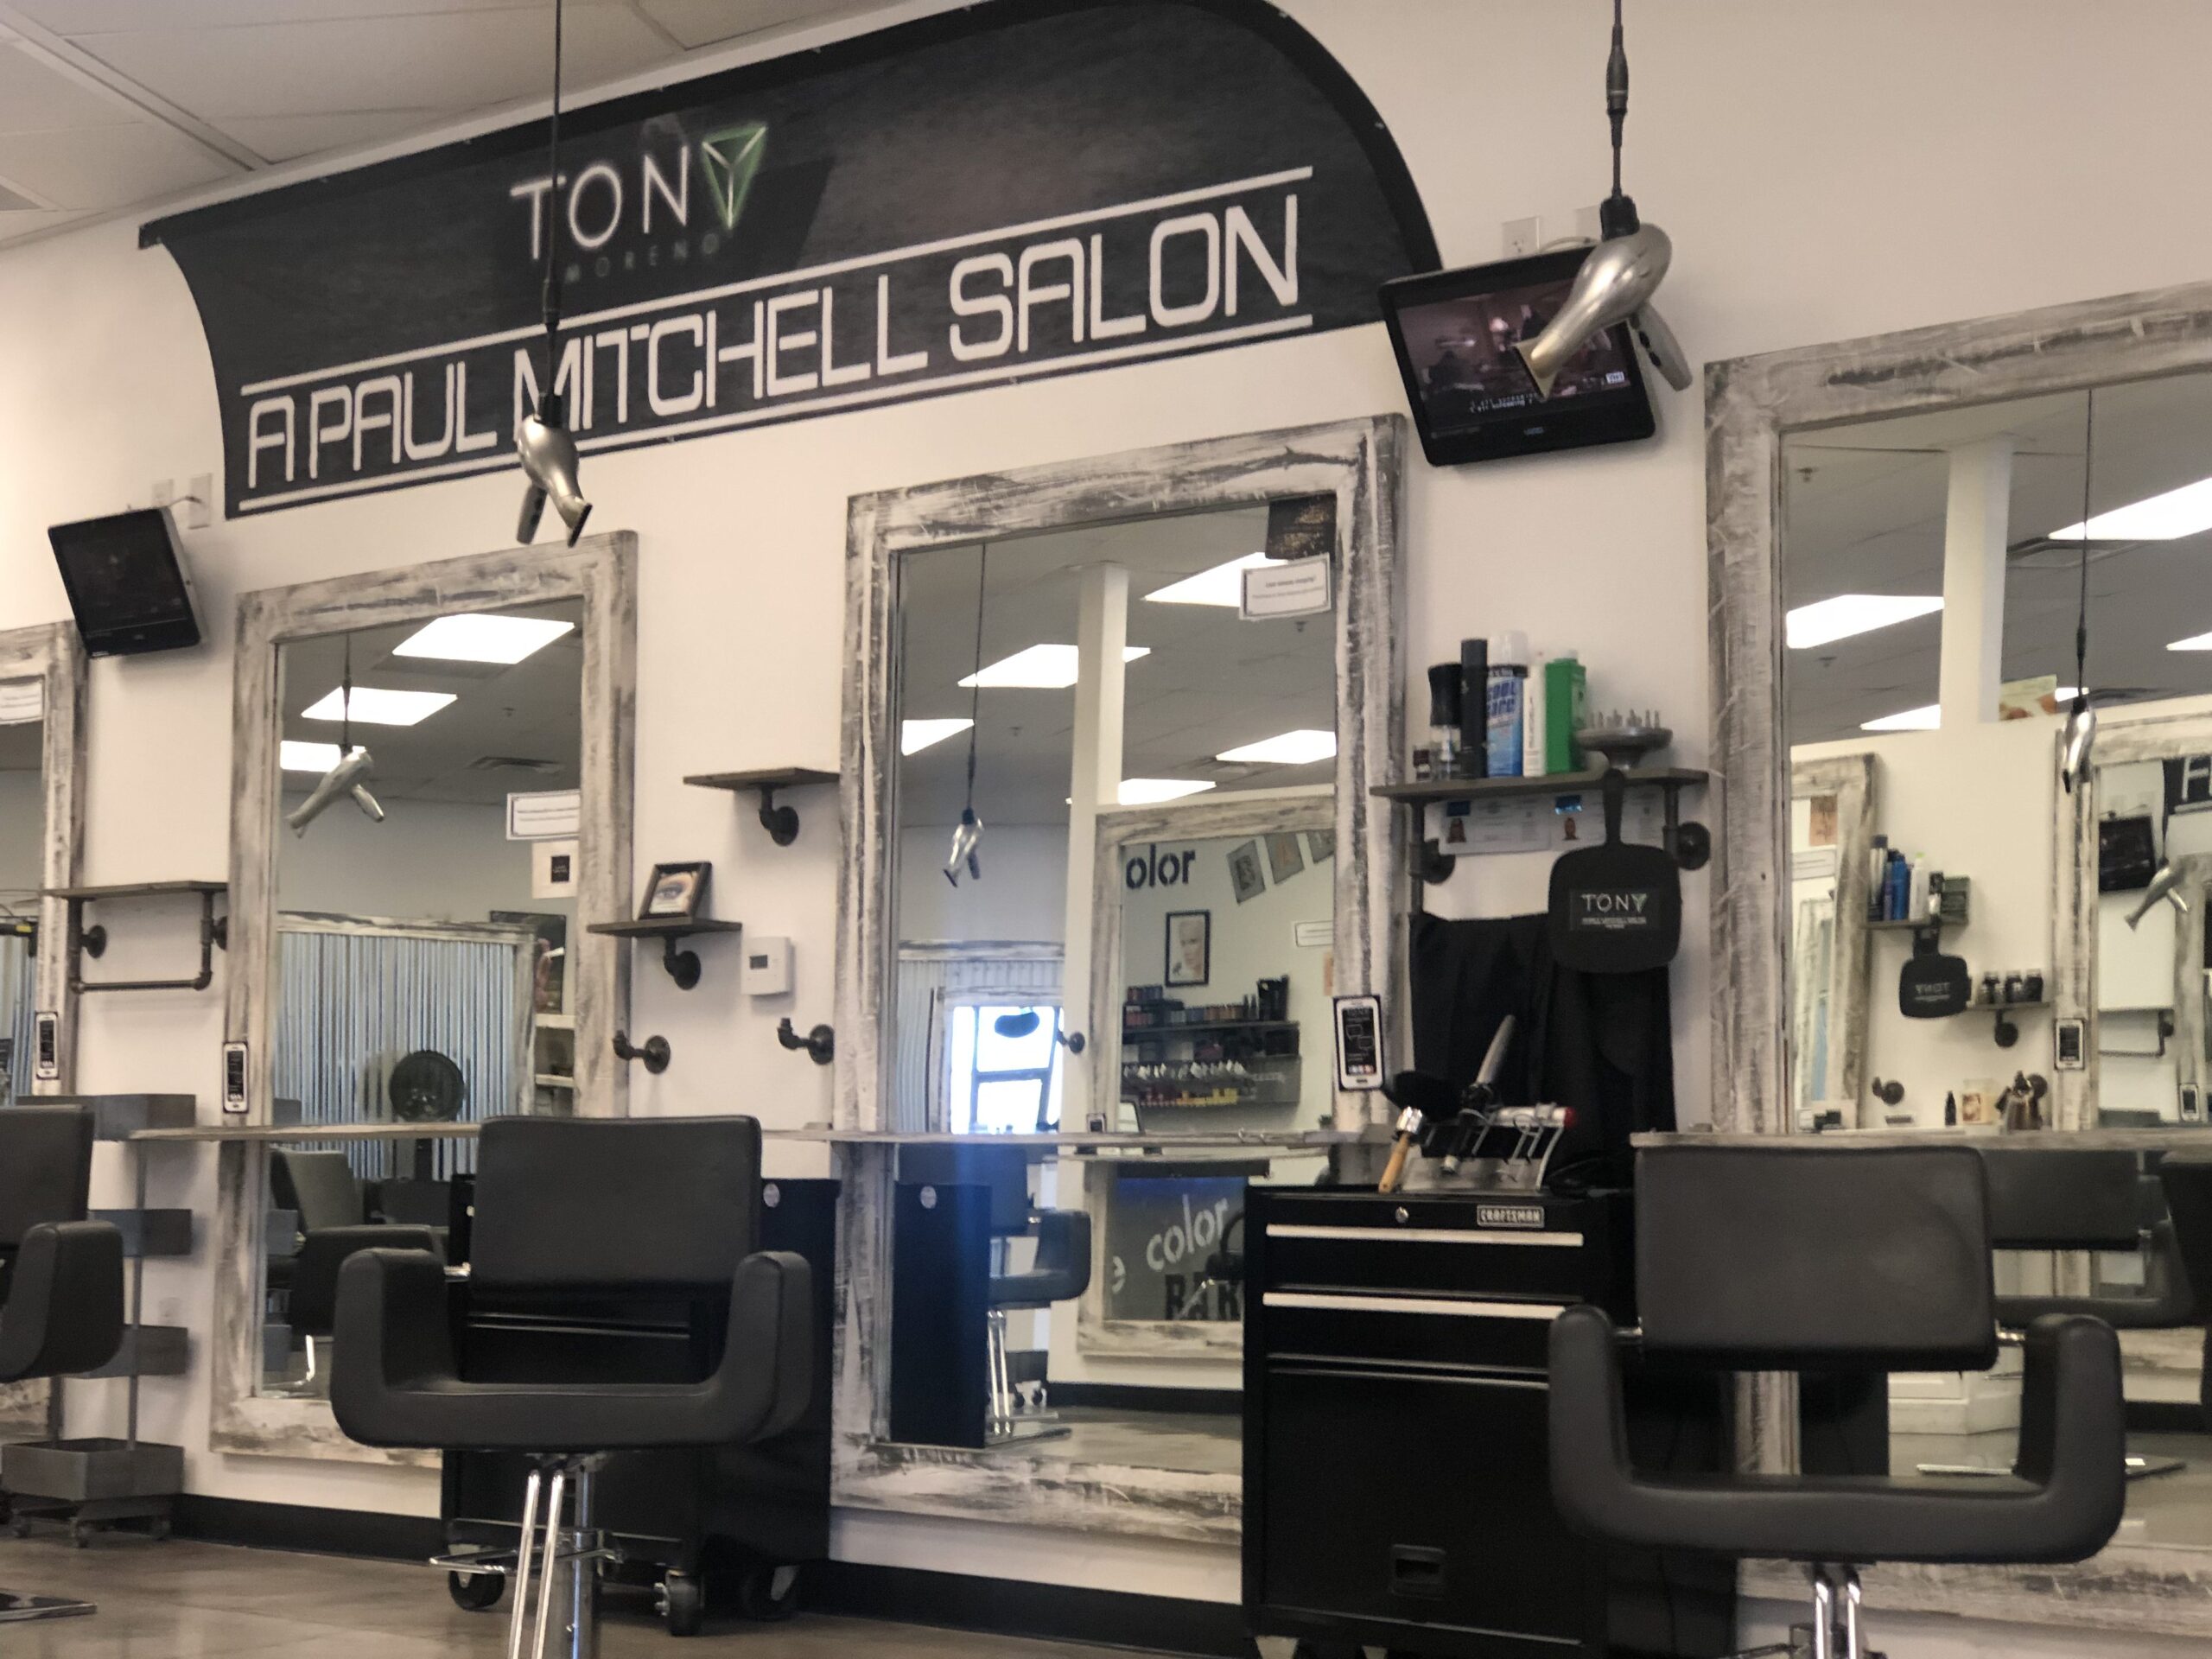 Tony Moreno Paul Mitchell Salon Freestyle Systems